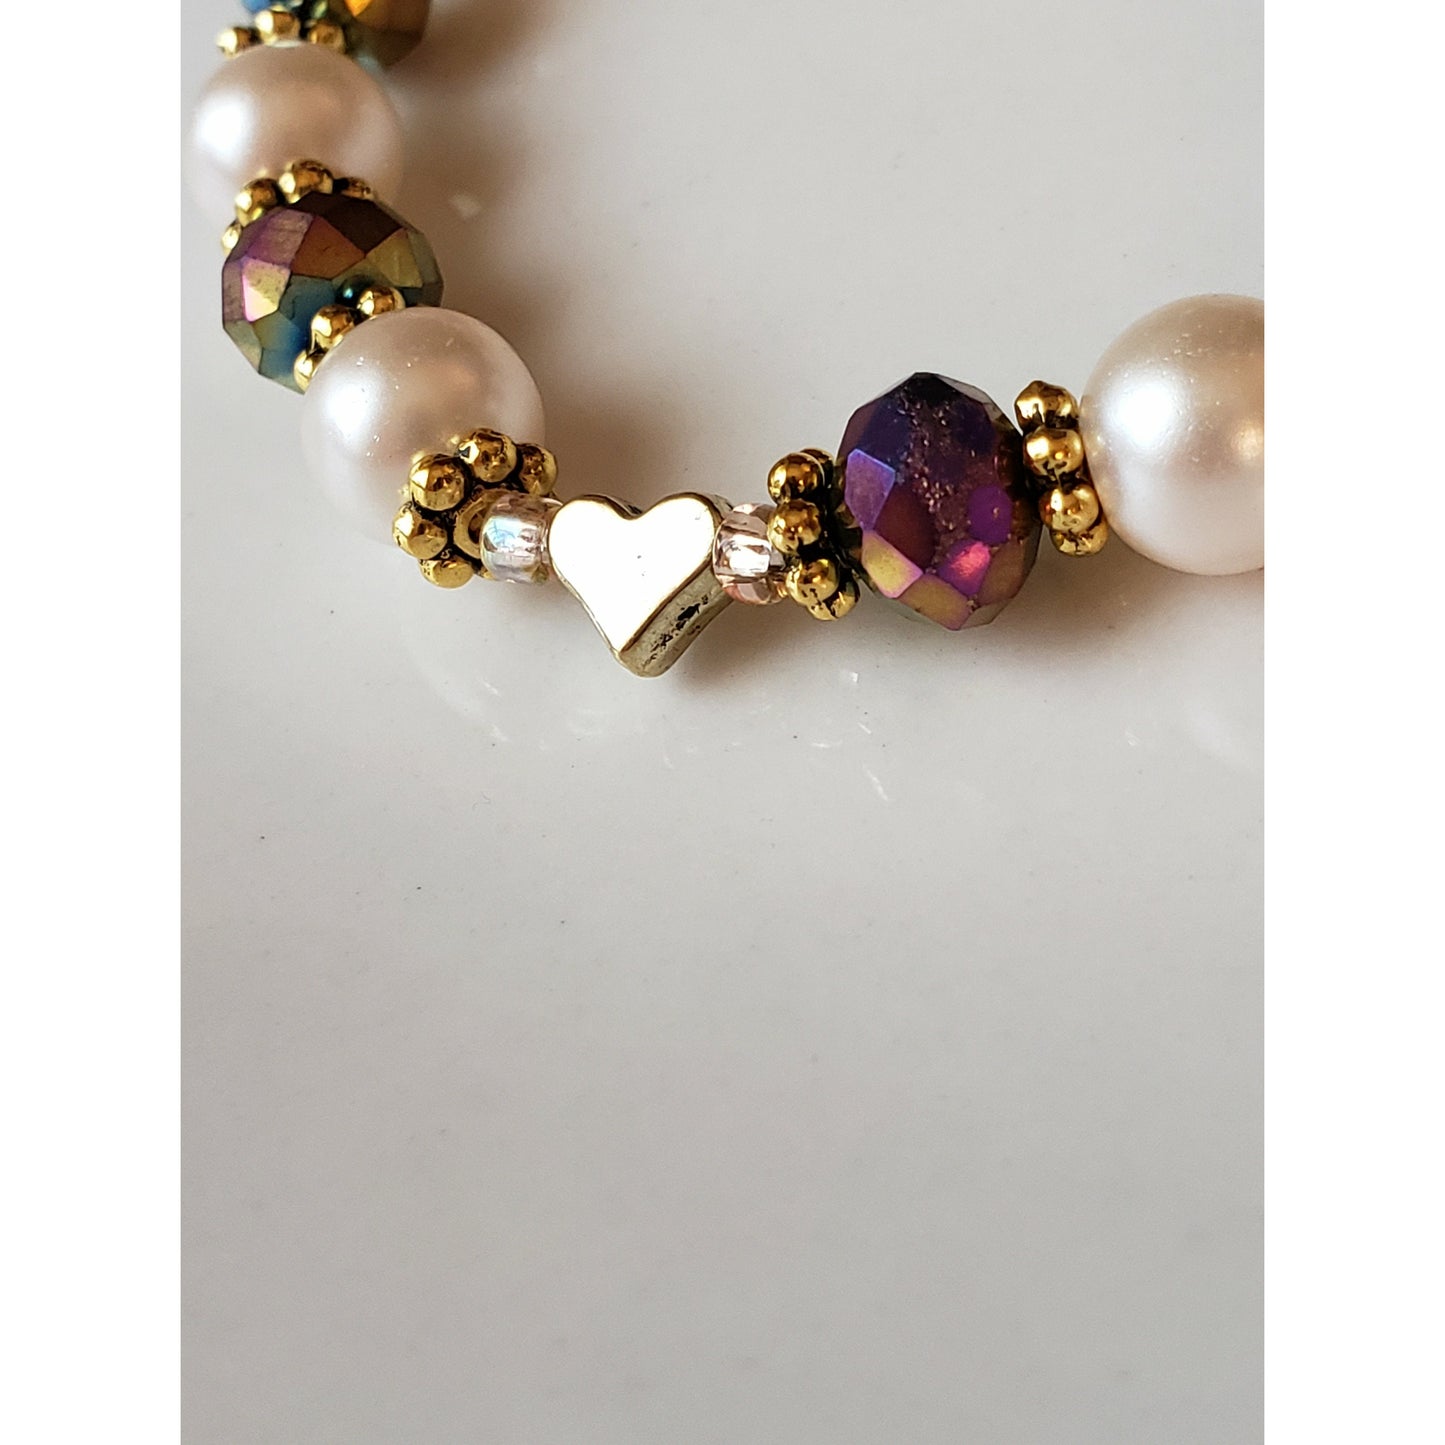 Communion Bracelet Religious jewelry